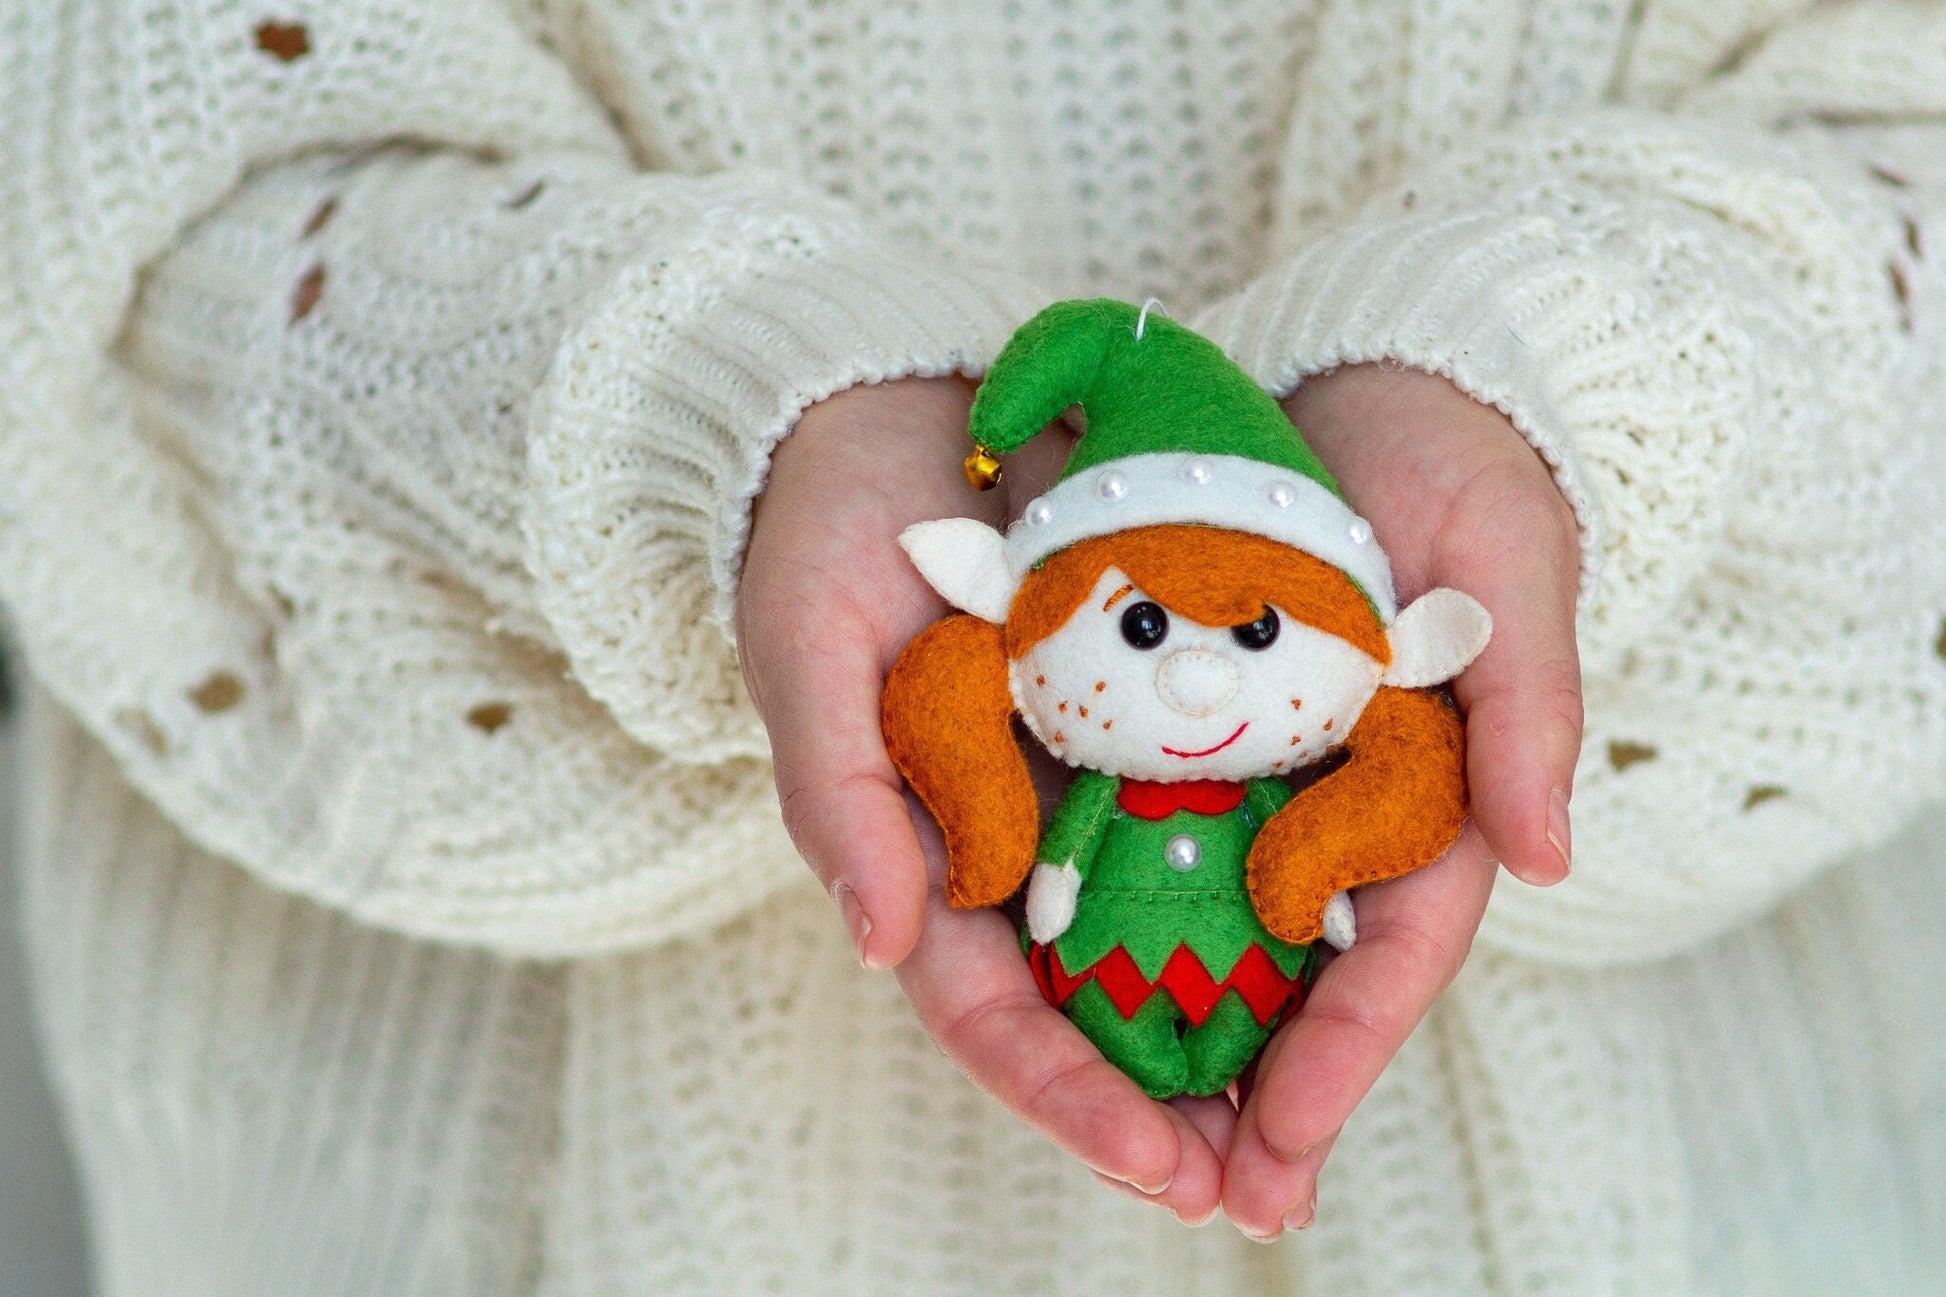 Christmas elf girl ornaments